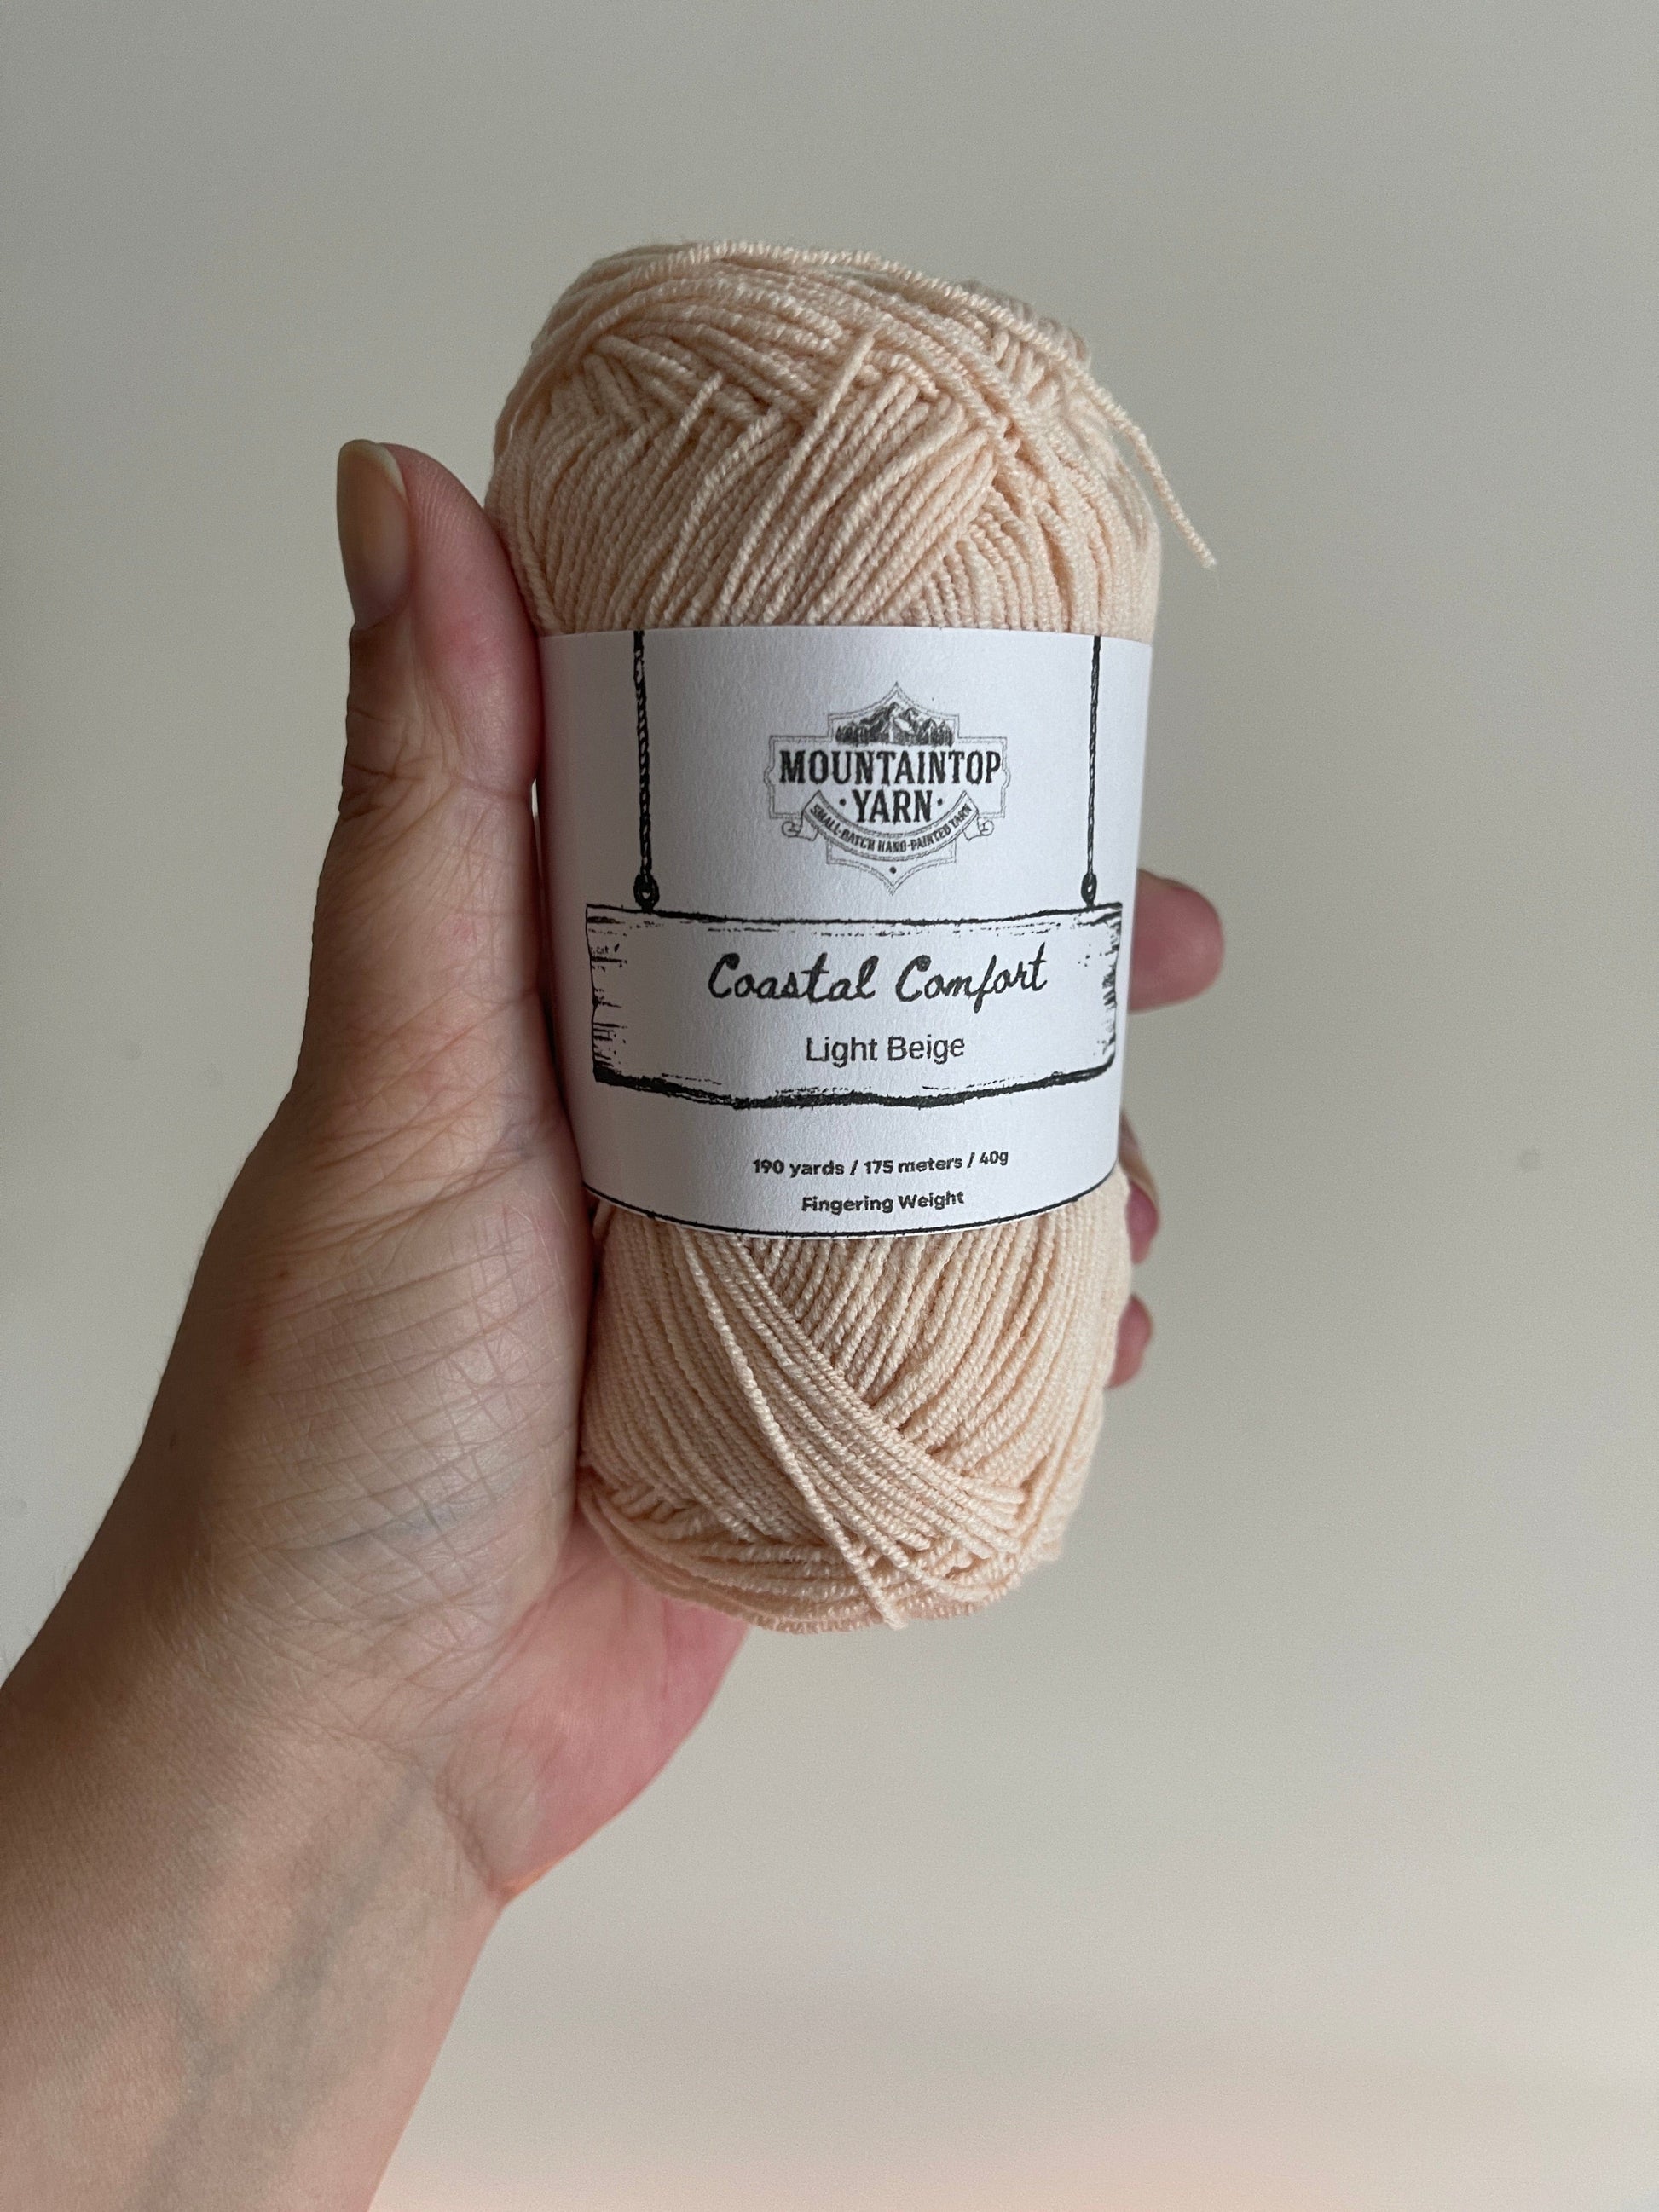 Mountaintop Yarn Light Beige Coastal Comfort - Cotton and Acrylic Blend Yarn Yarn